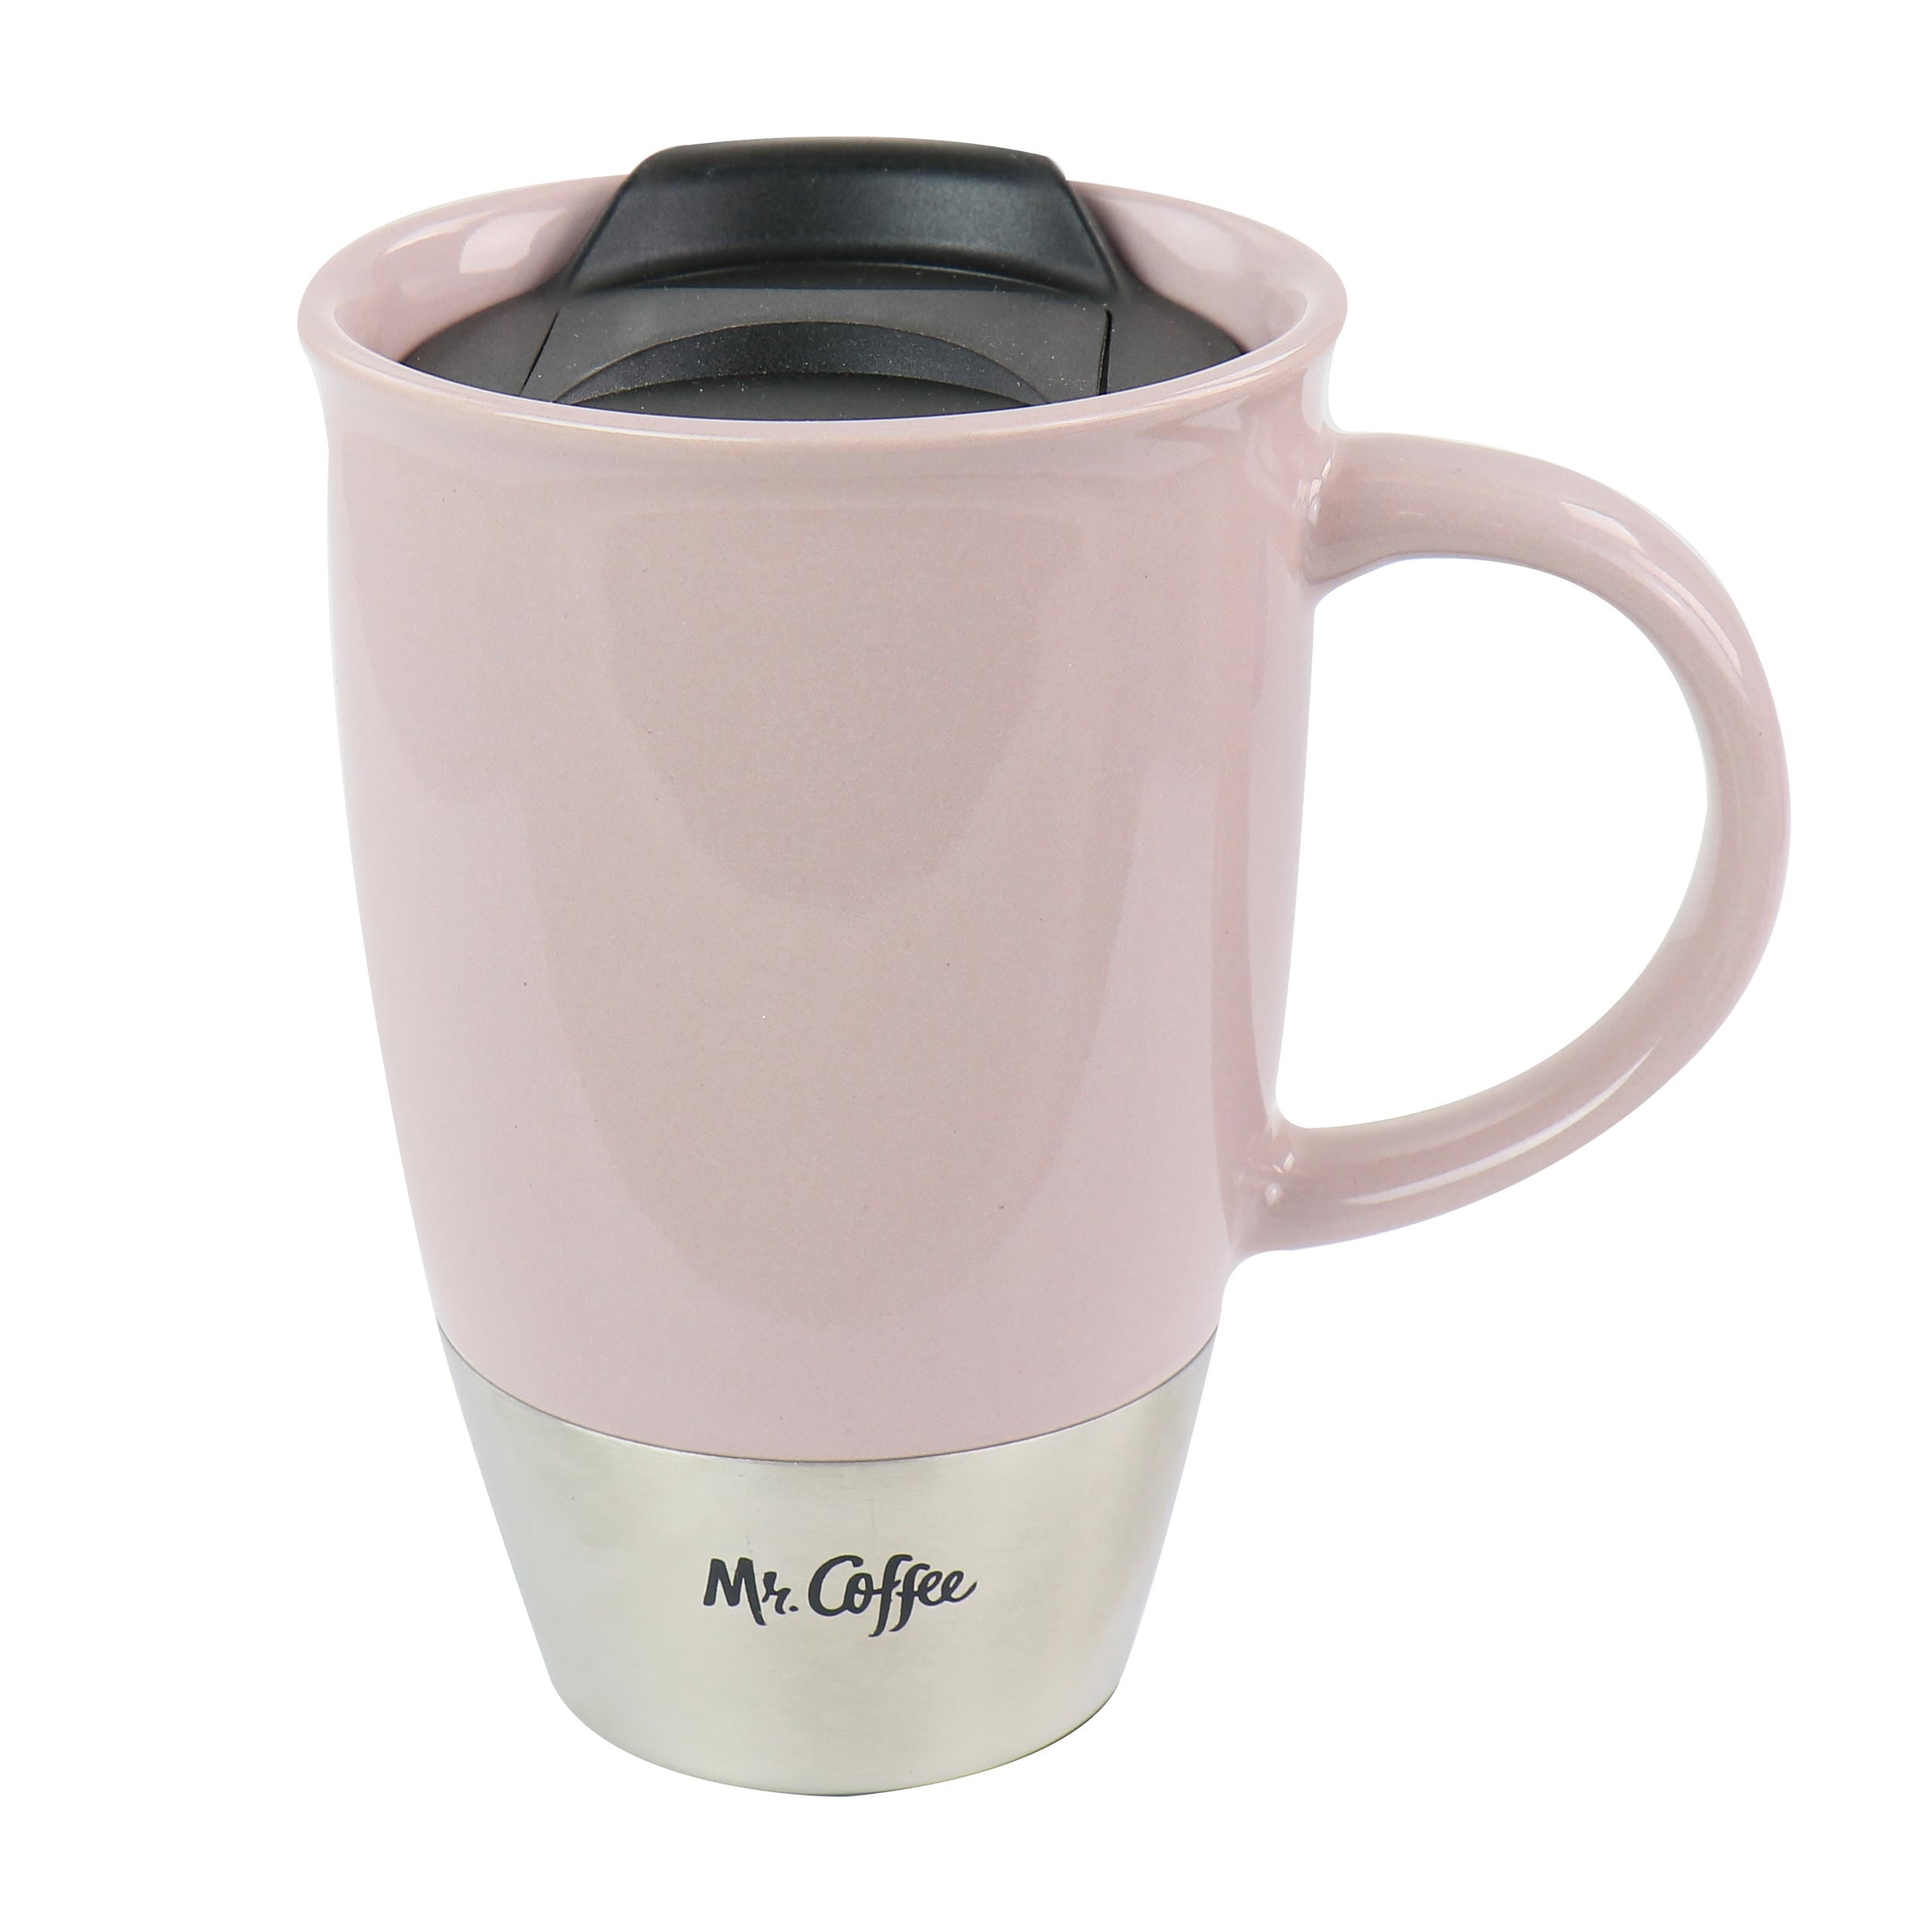 Mr. Coffee Couplet Travel 3-pack mug set 